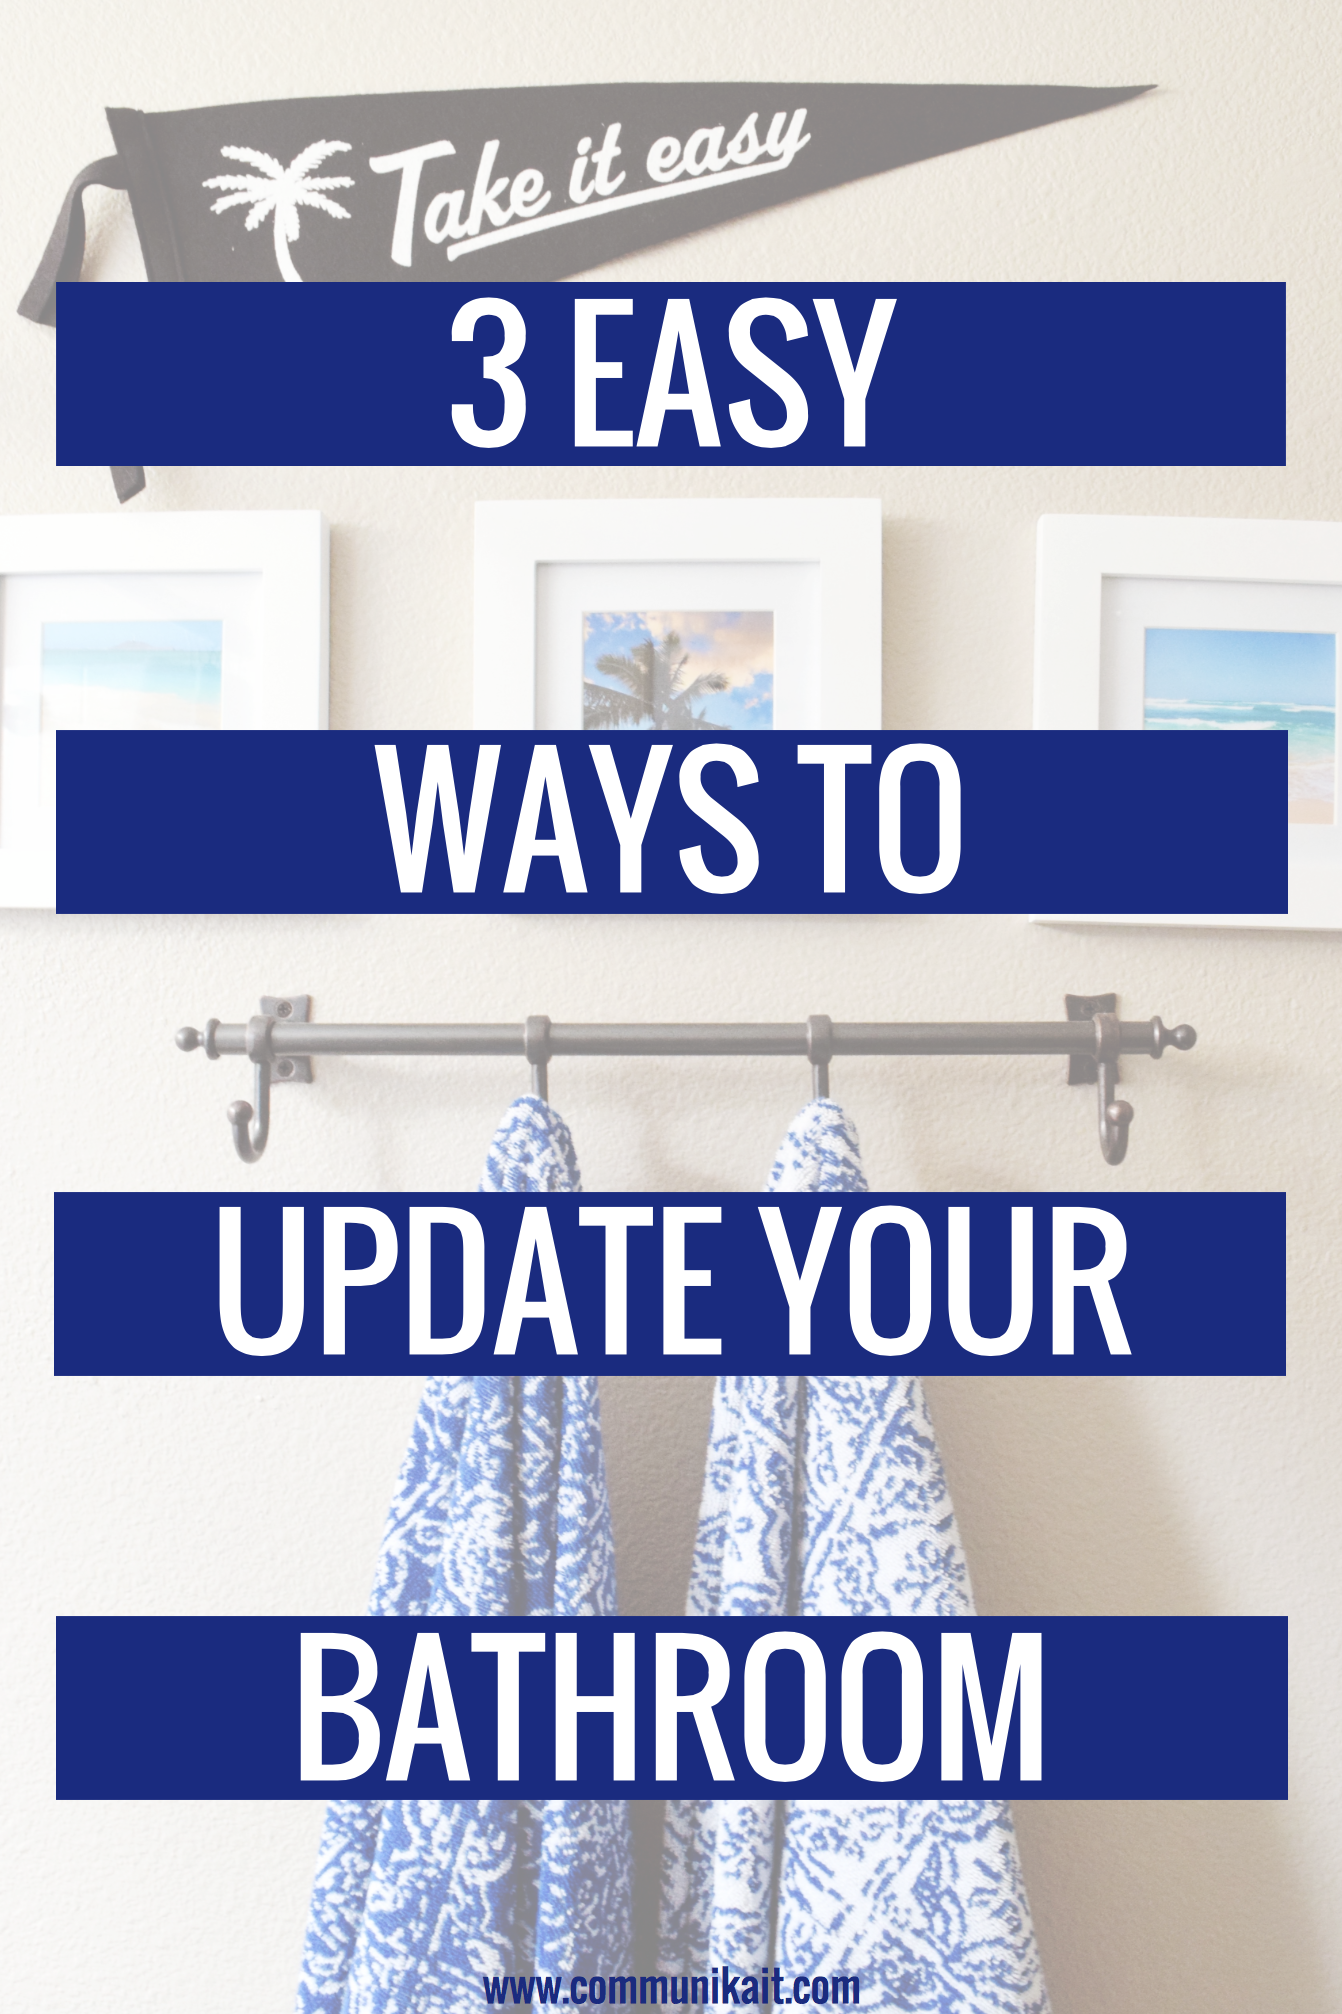 3 Ways To Update Your Bathroom - Home Style - Interior Design - Hawaiian Home - DIY - Guest Bathroom - Communikait